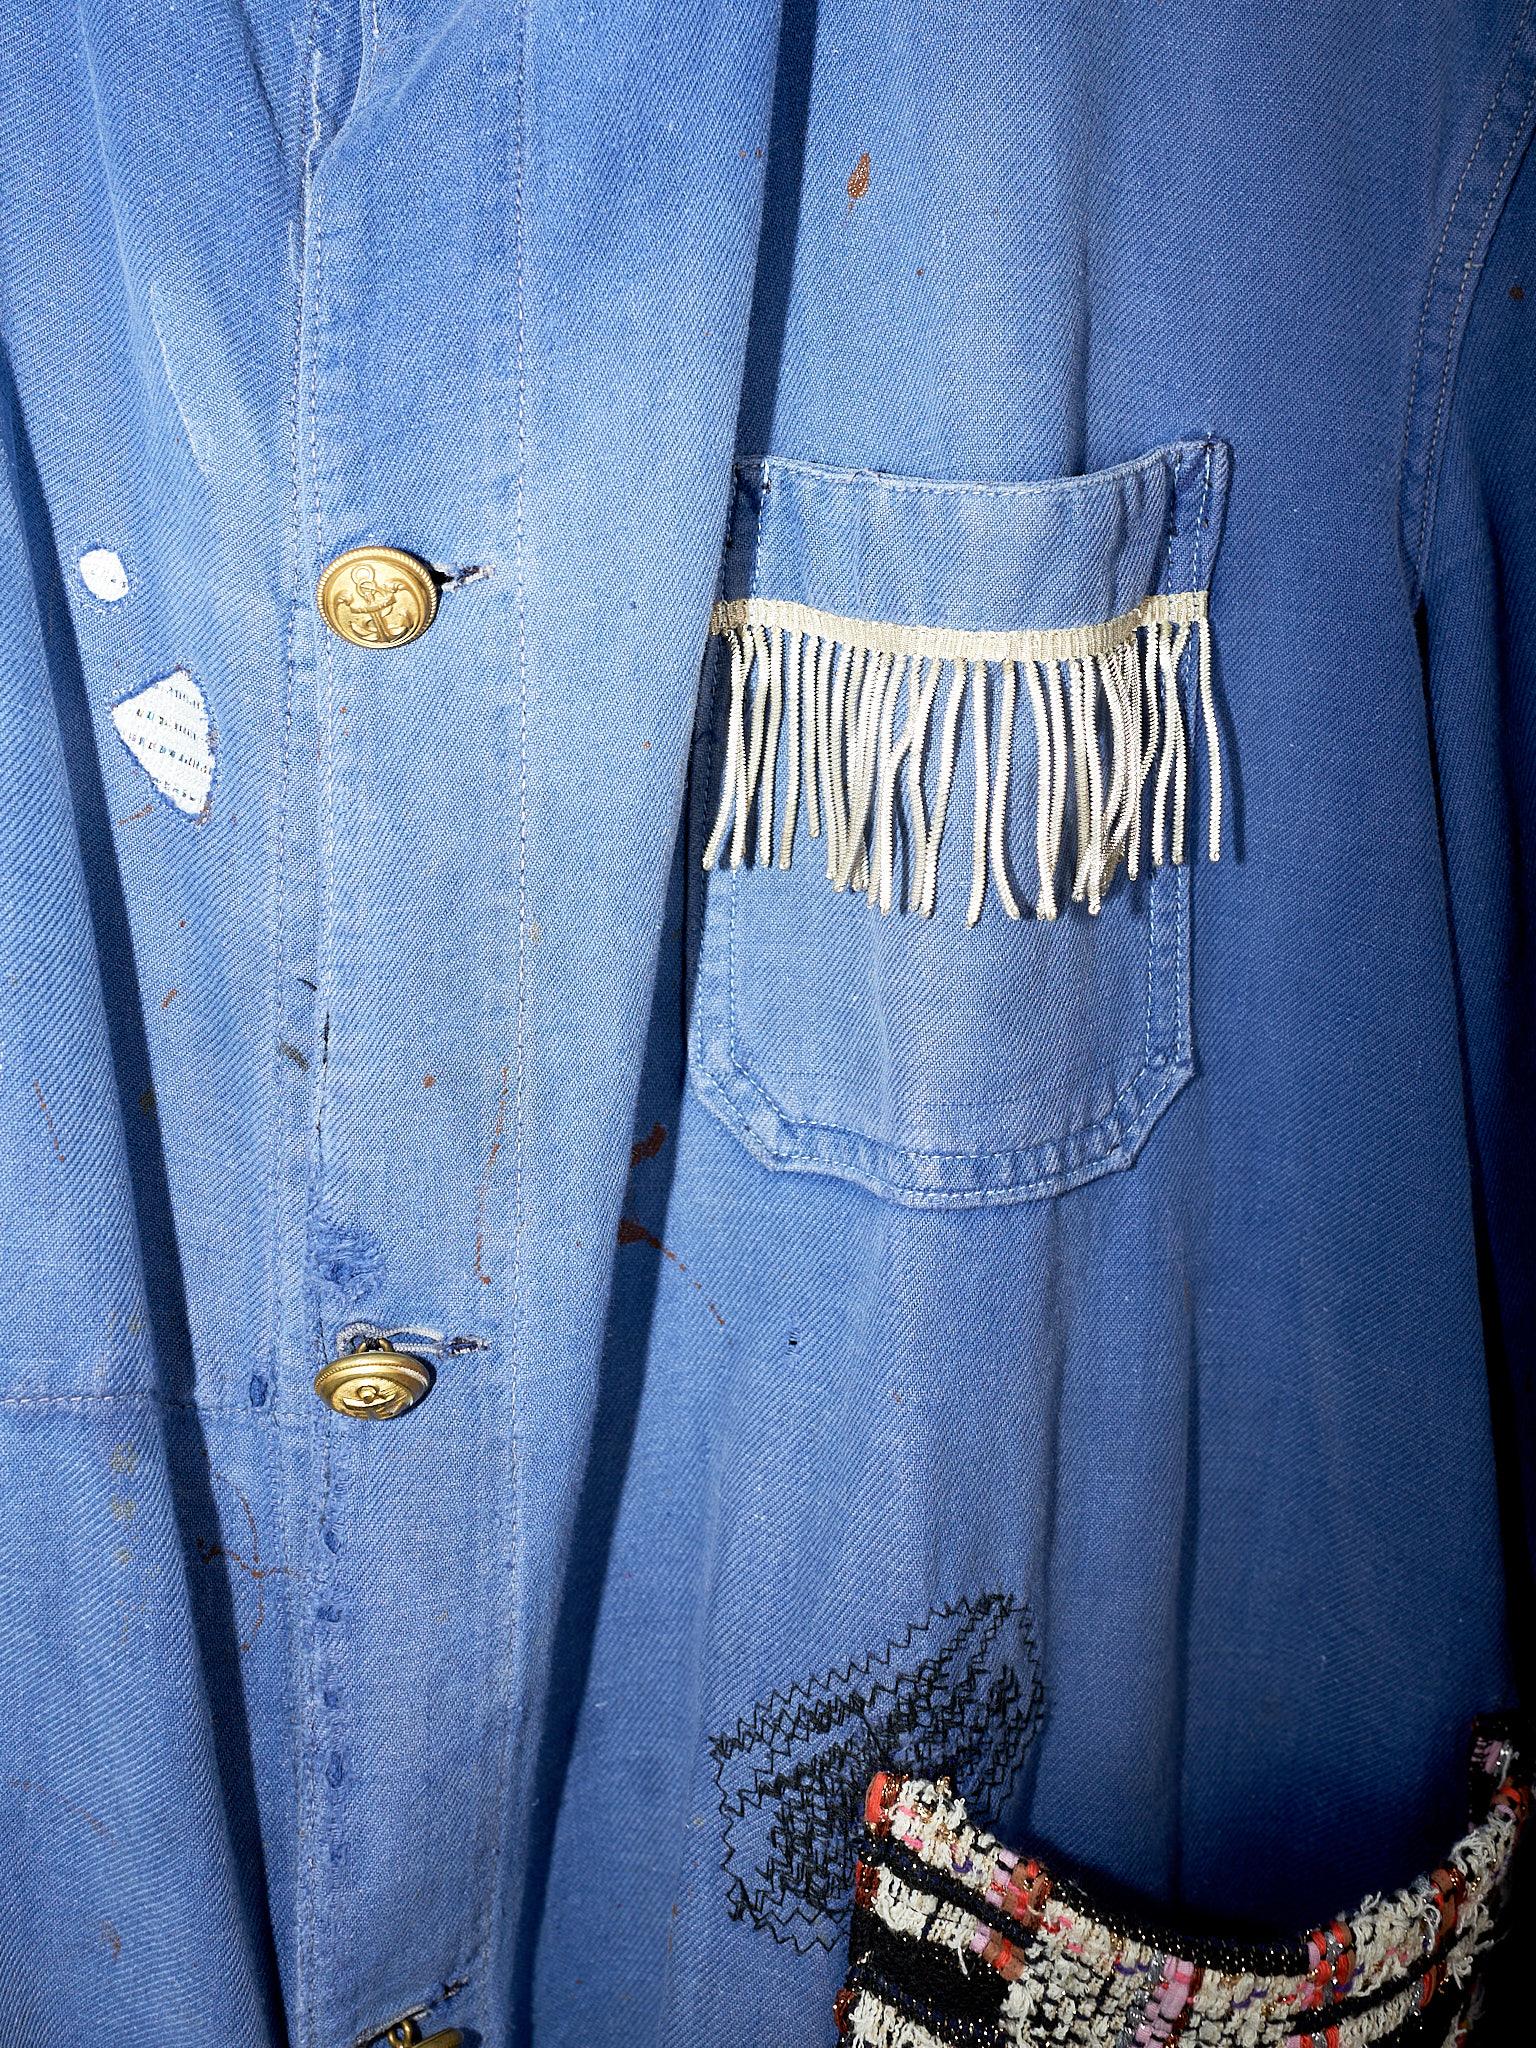 Tweed Pocket Light Blue Jacket Cotton French Work Wear Distressed Lurex Tweed 1